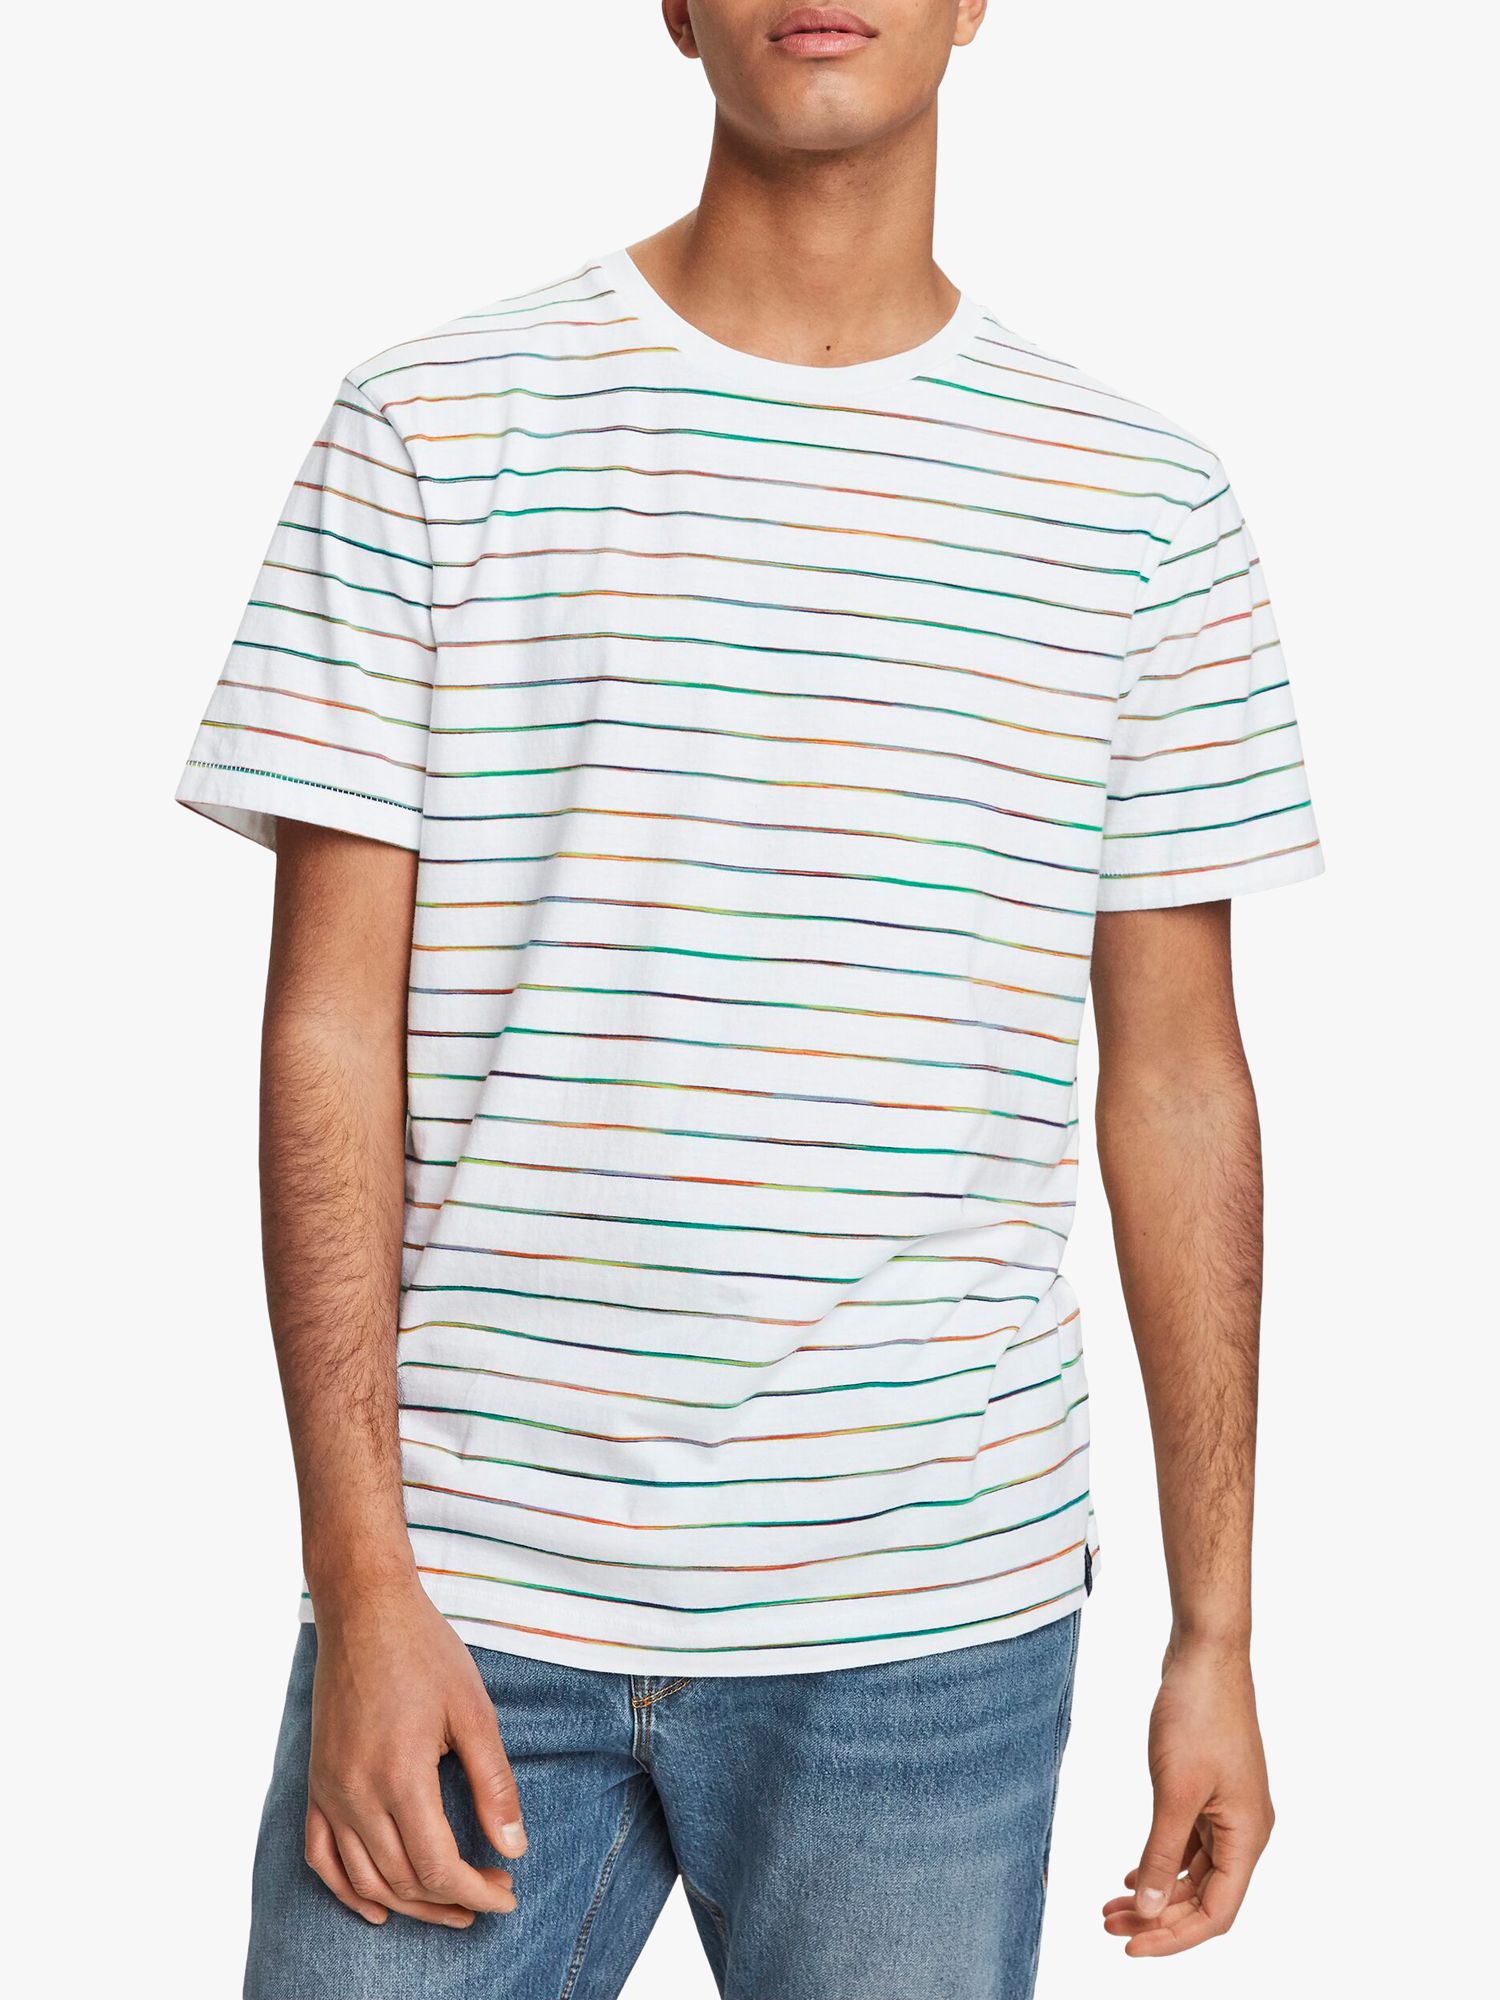 Scotch & Soda Stripe T-Shirt, White/Multi